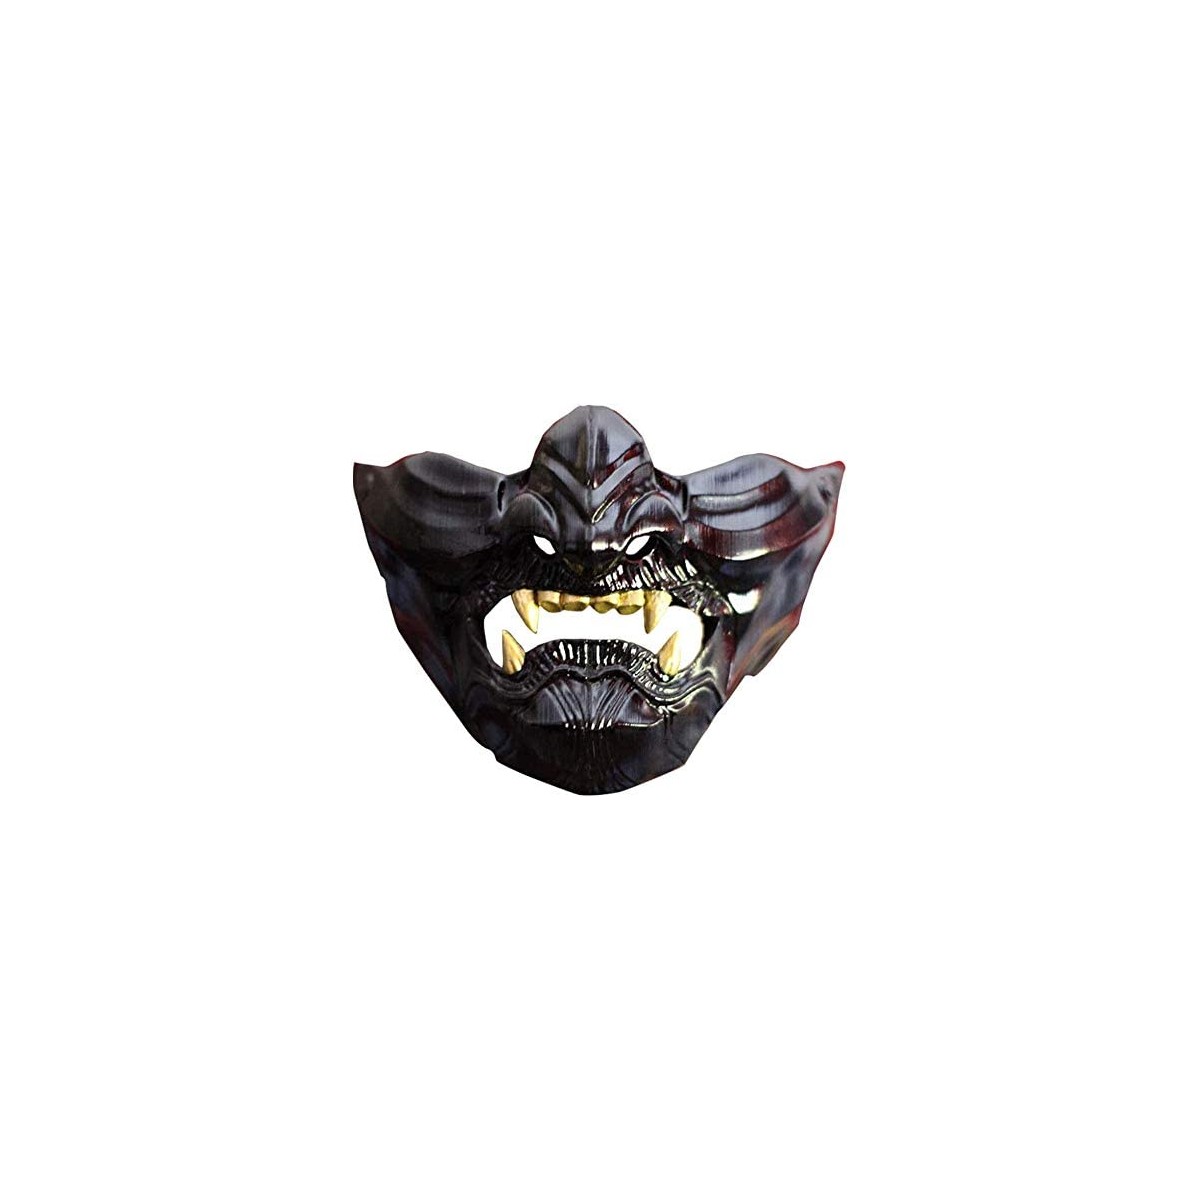 Maschera di Halloween fantasma di Tsushima maschera per cosplay protettore giapponese guerriero secondo elemento mezza faccia festa in maschera. 